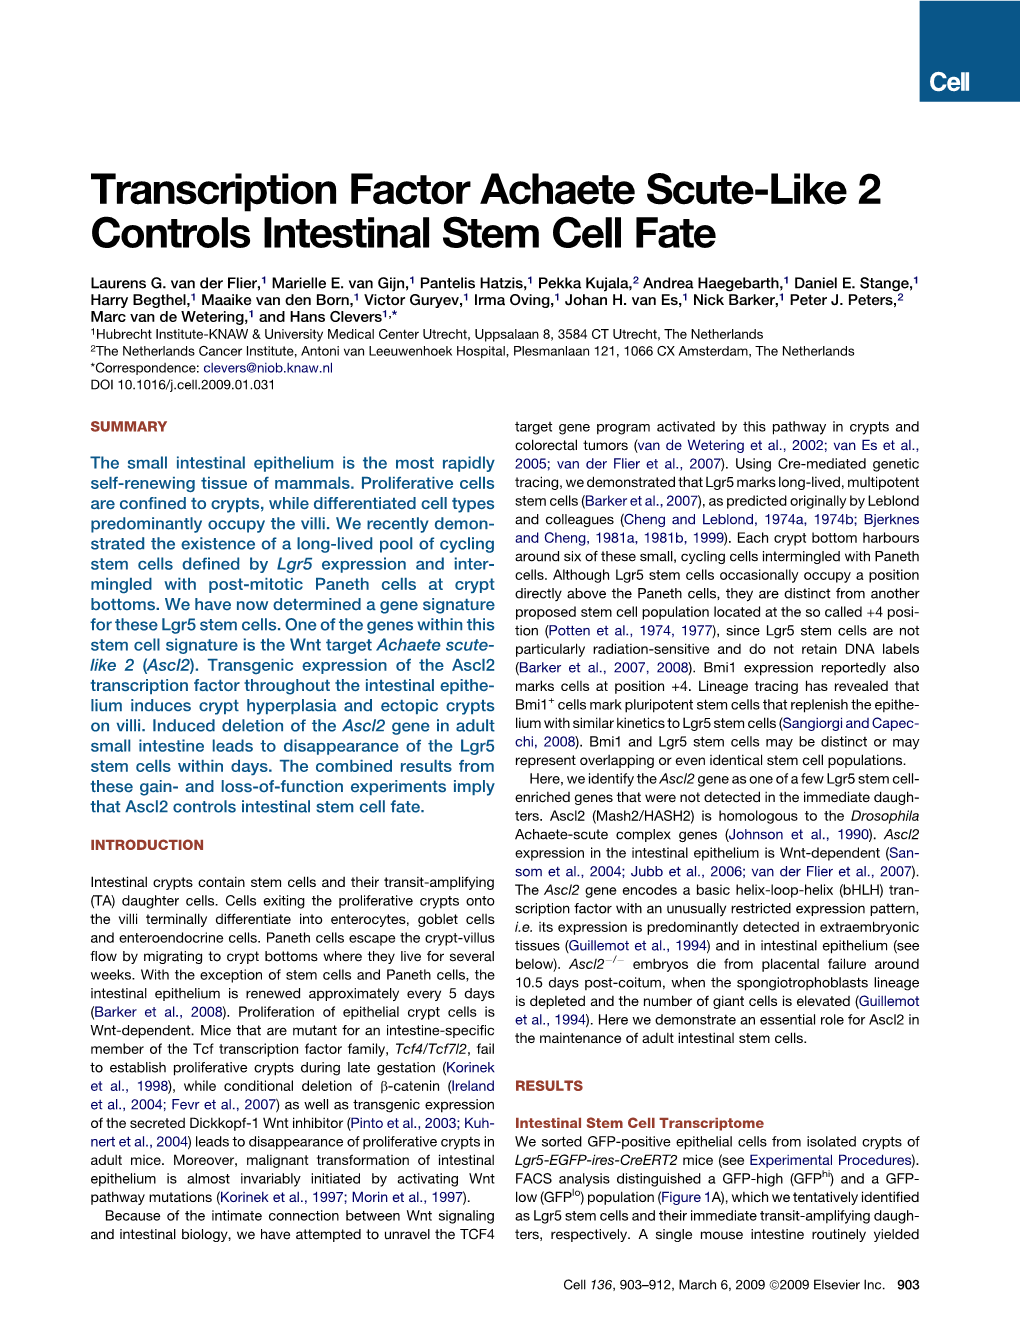 Transcription Factor Achaete Scute-Like 2 (Ascl2)